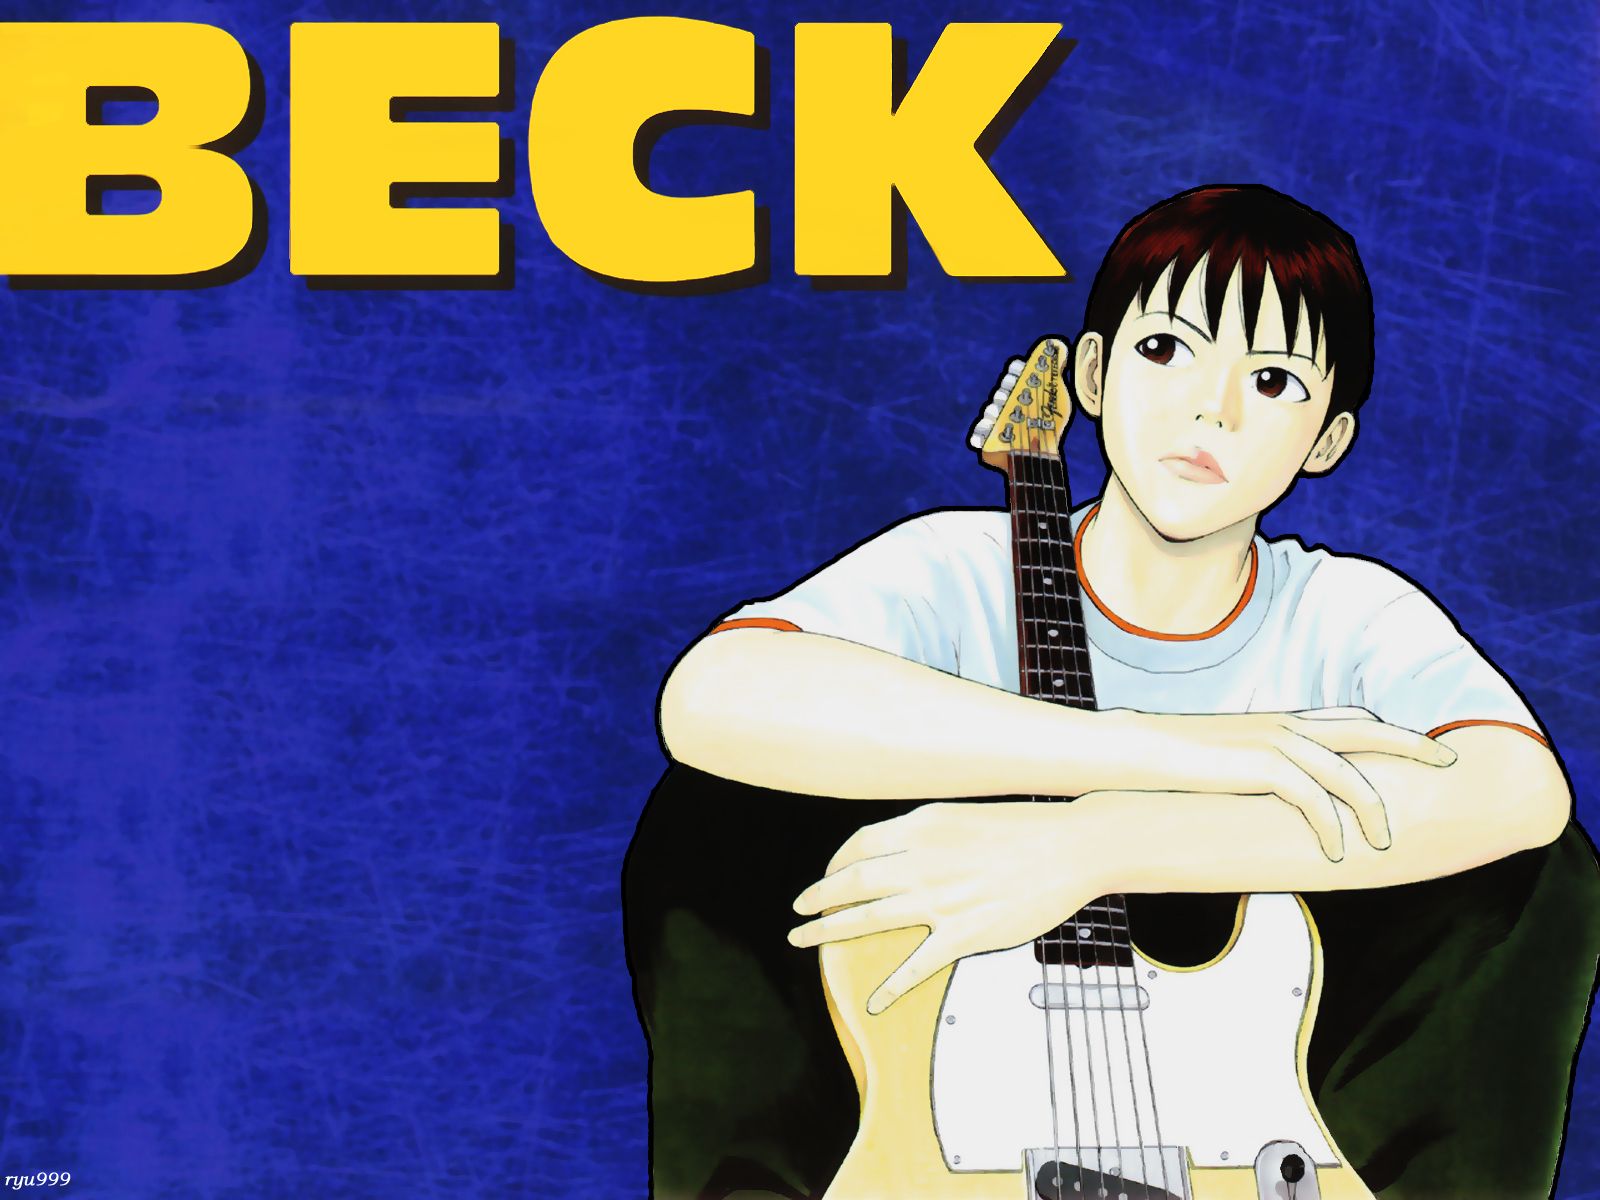 Beck Mongolian Chop Squad Koyuki. Get Anime Wallpaper. Conan movie, Anime, Tom cruise costume